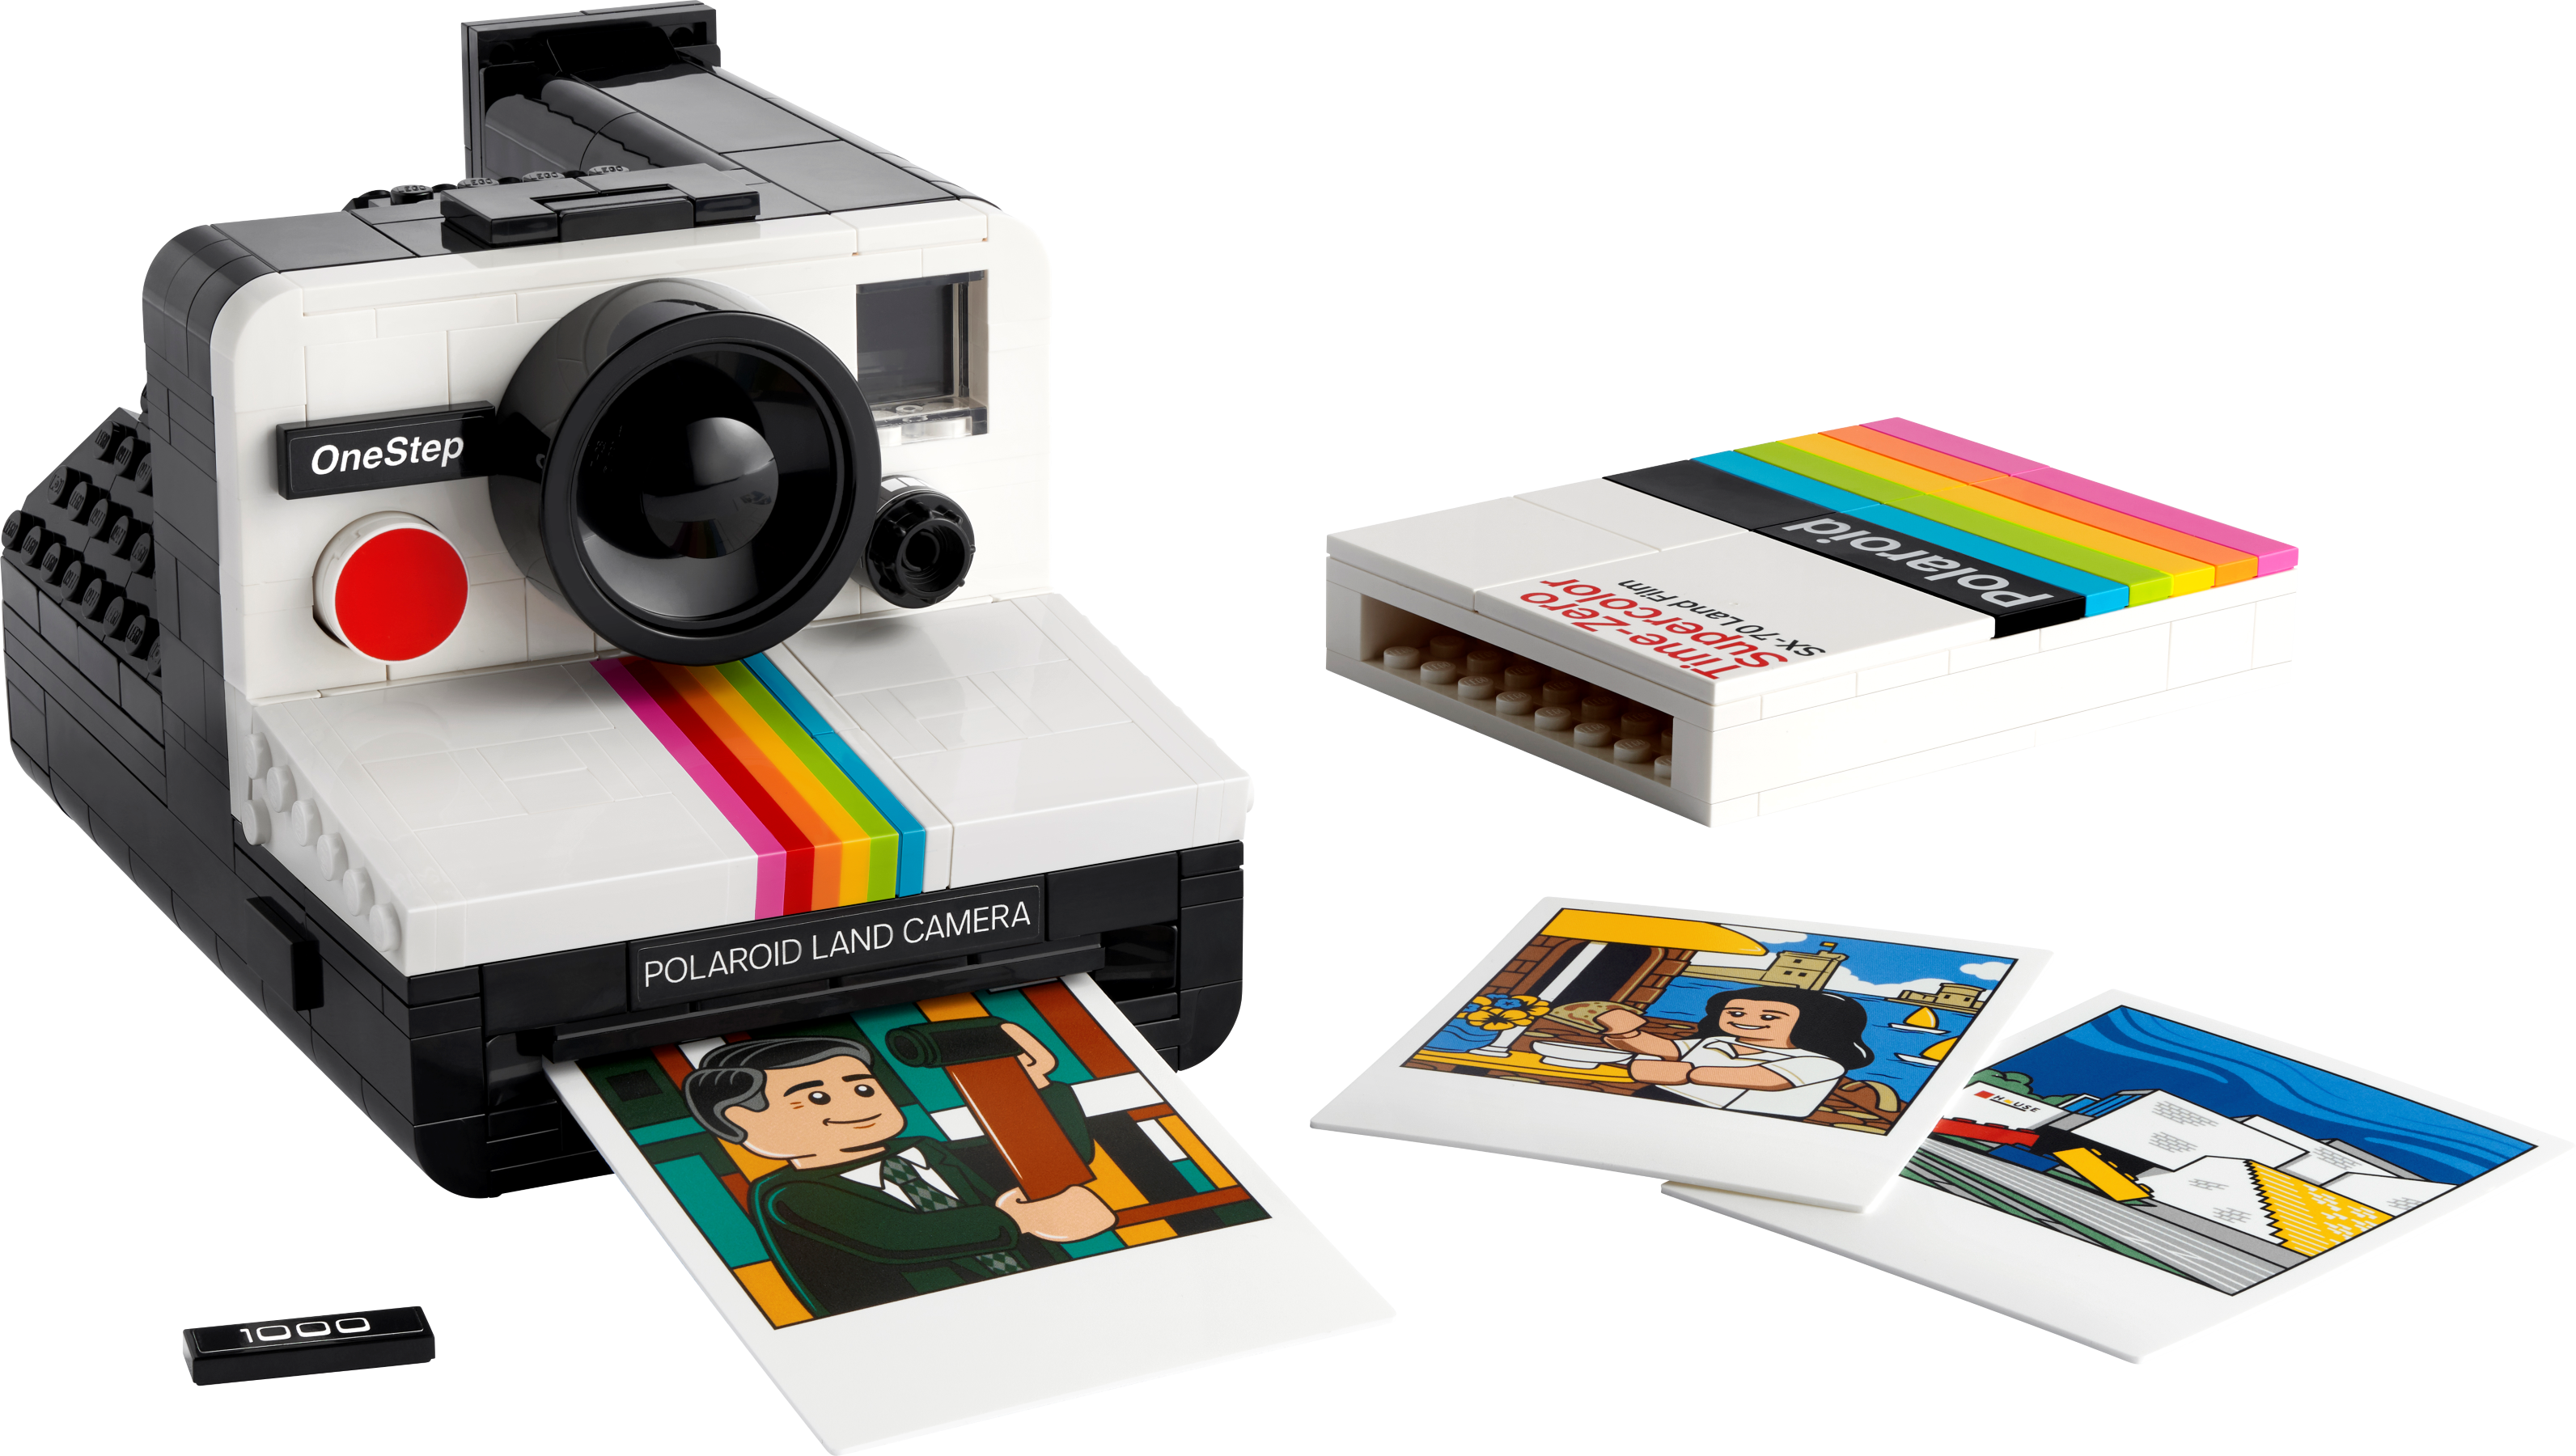 Fotocamera Polaroid OneStep SX-70 21345, Ideas